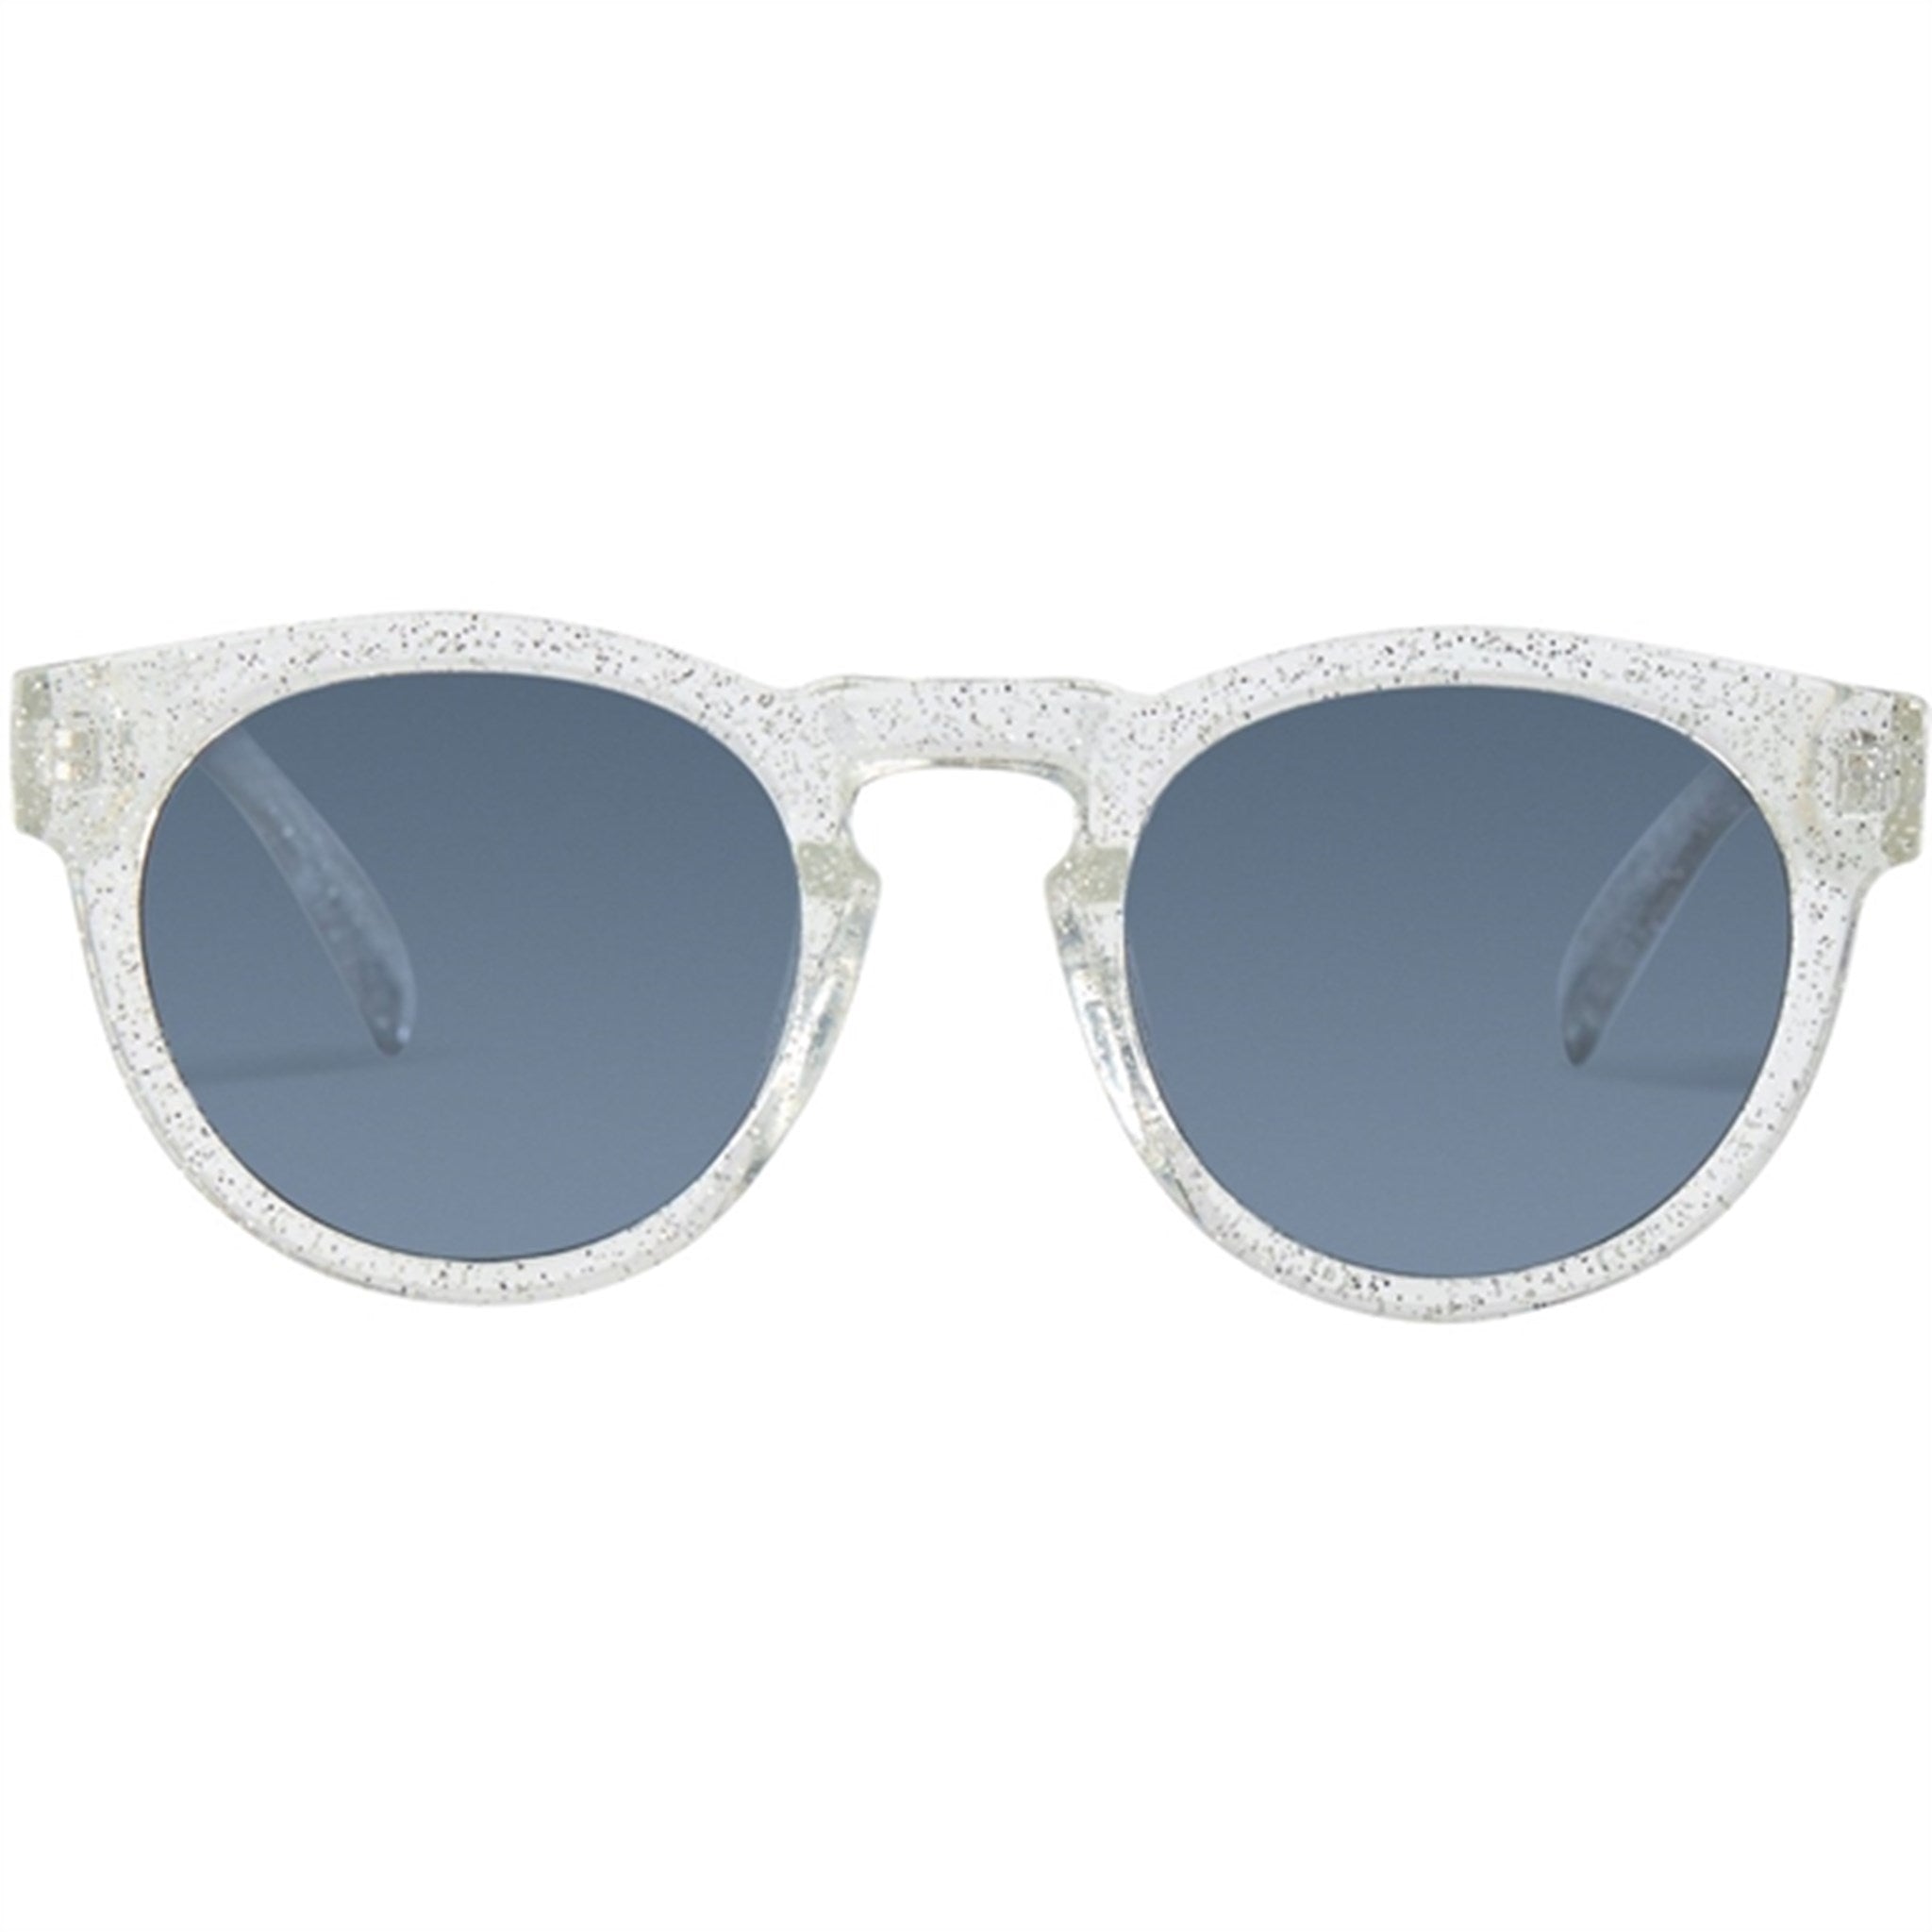 Sofie Schnoor Sunglasses Silver